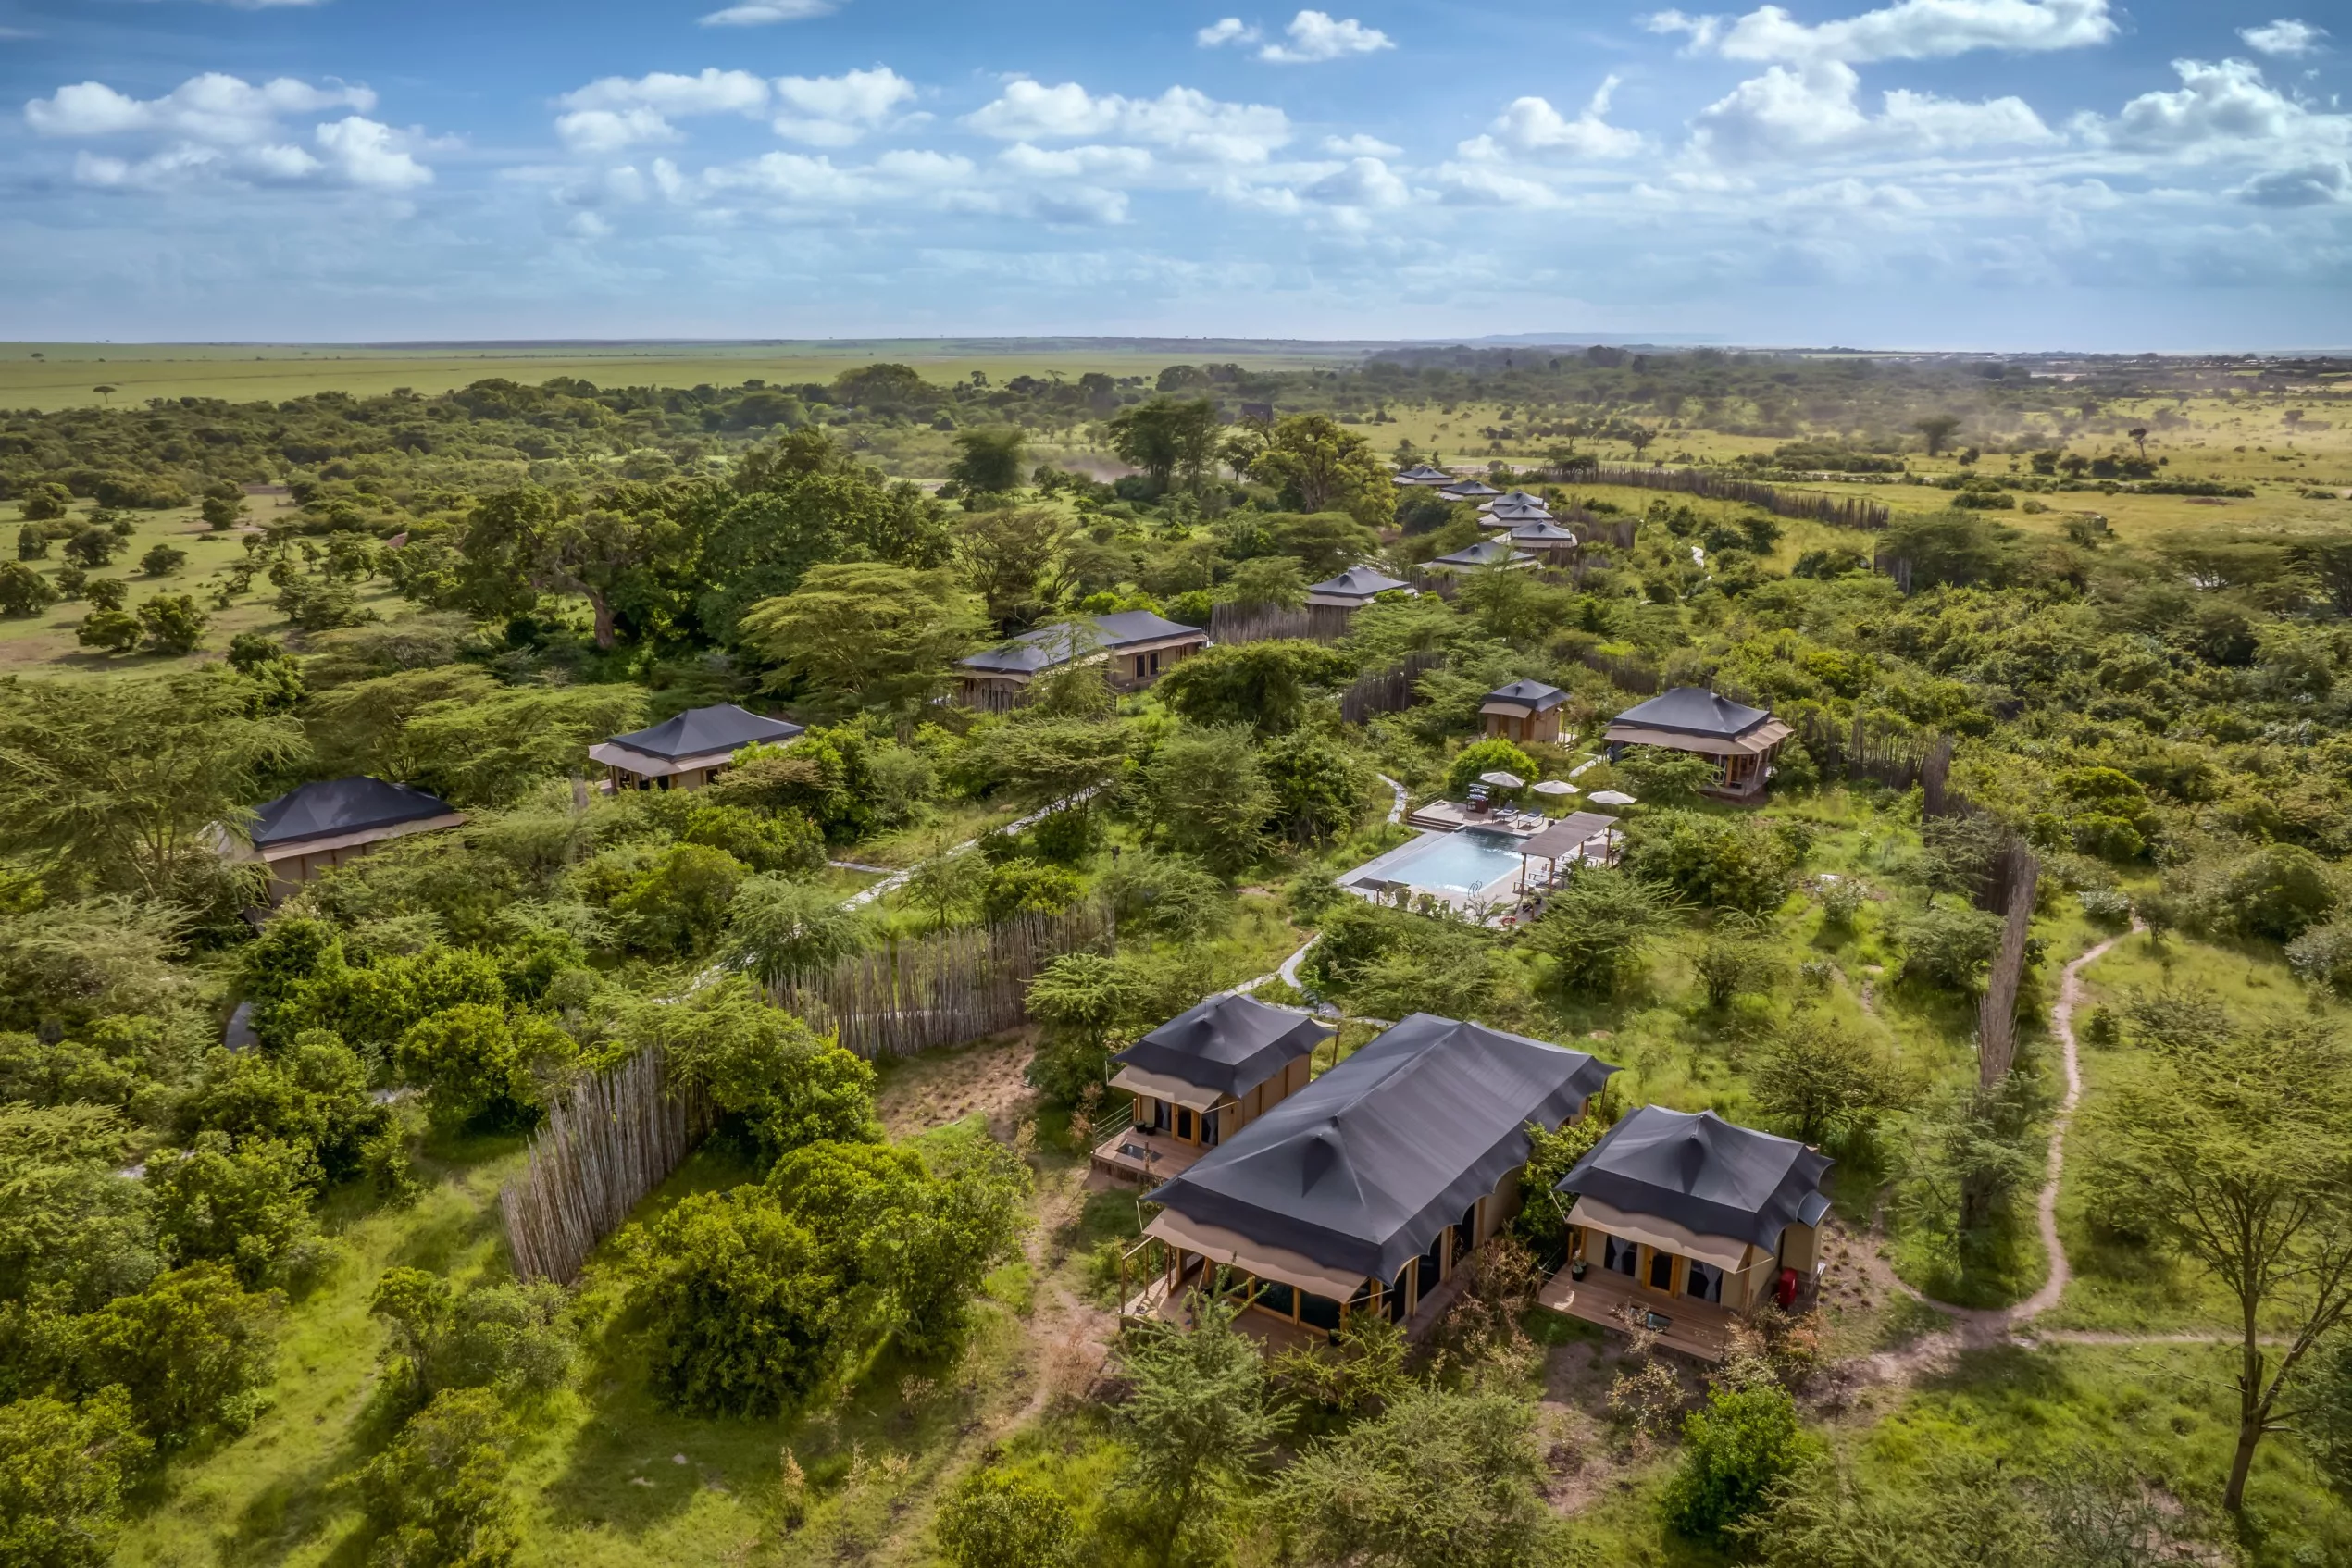 JW Marriott Masai Mara Lodge bags AHEAD Award for Top New Hotel Jarastyle travel